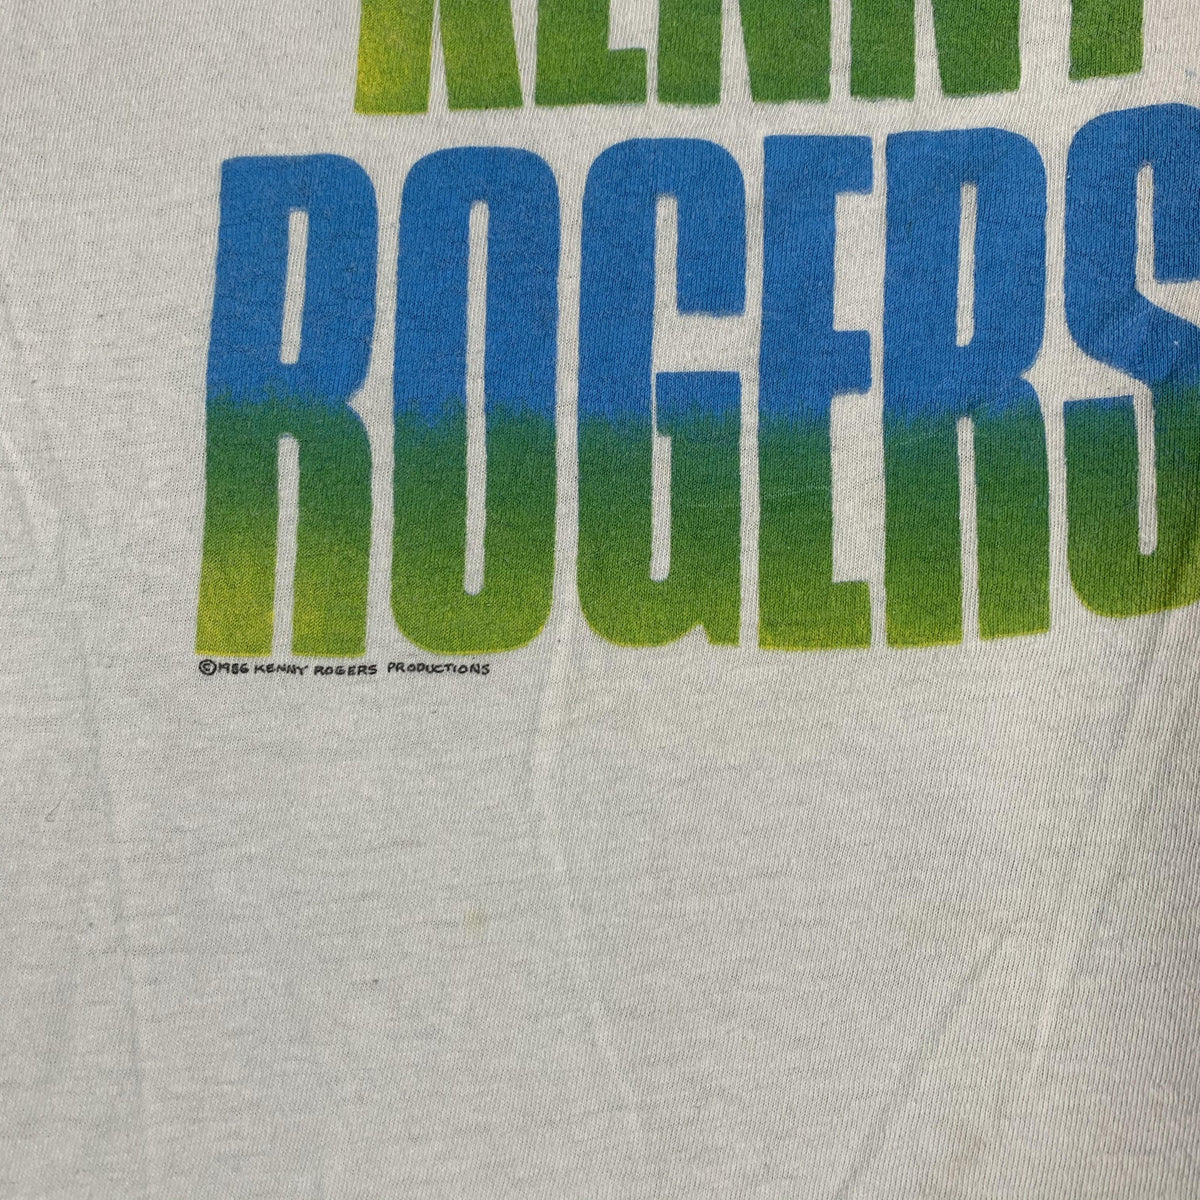 Vintage Kenny Rogers “Productions” T-Shirt - jointcustodydc